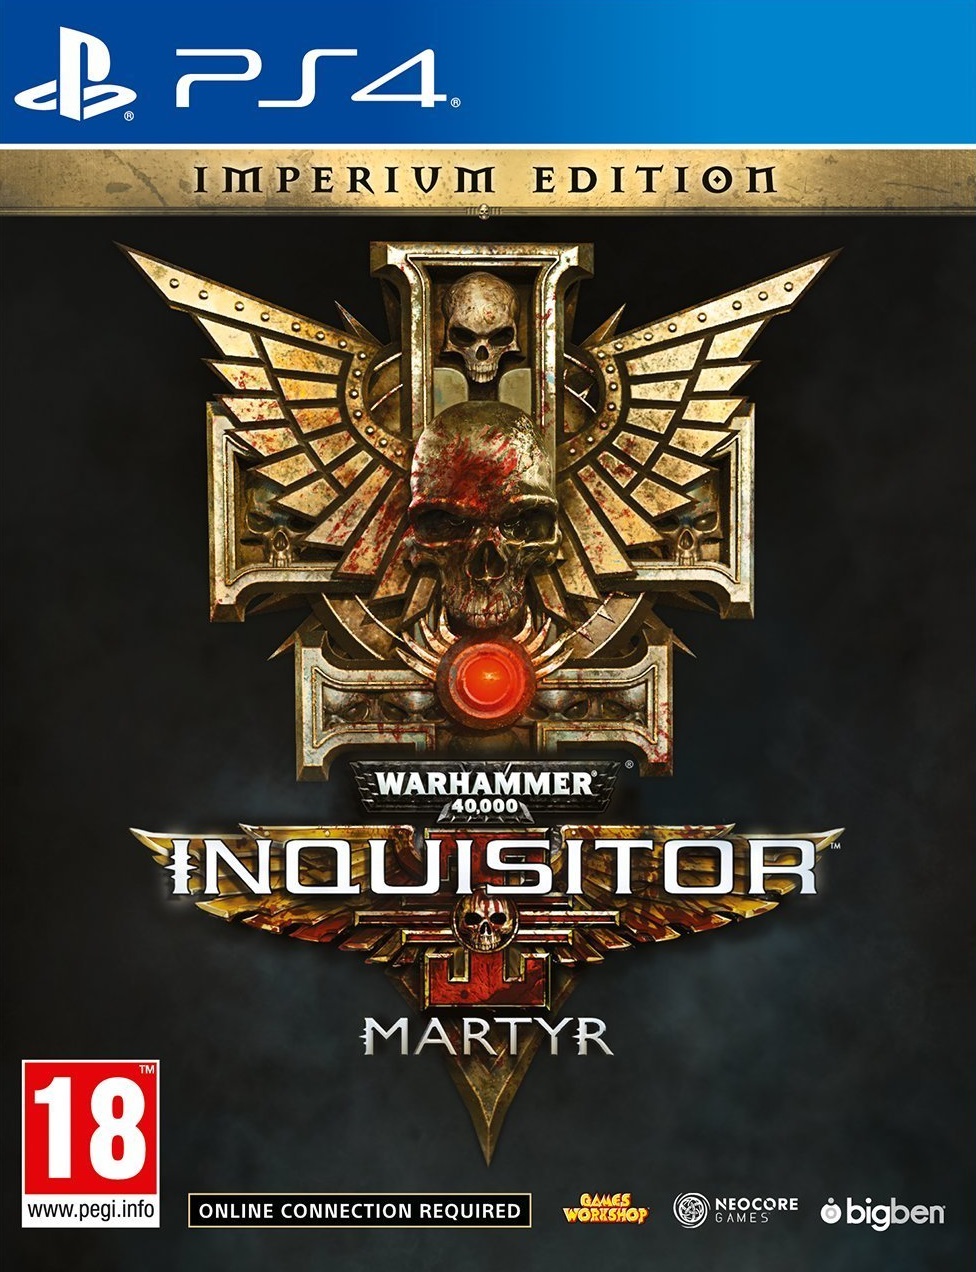 Warhammer 40,000: Inquisitor - Martyr Imperium Edition (Magyar Felirat) - PlayStation 4 Játékok